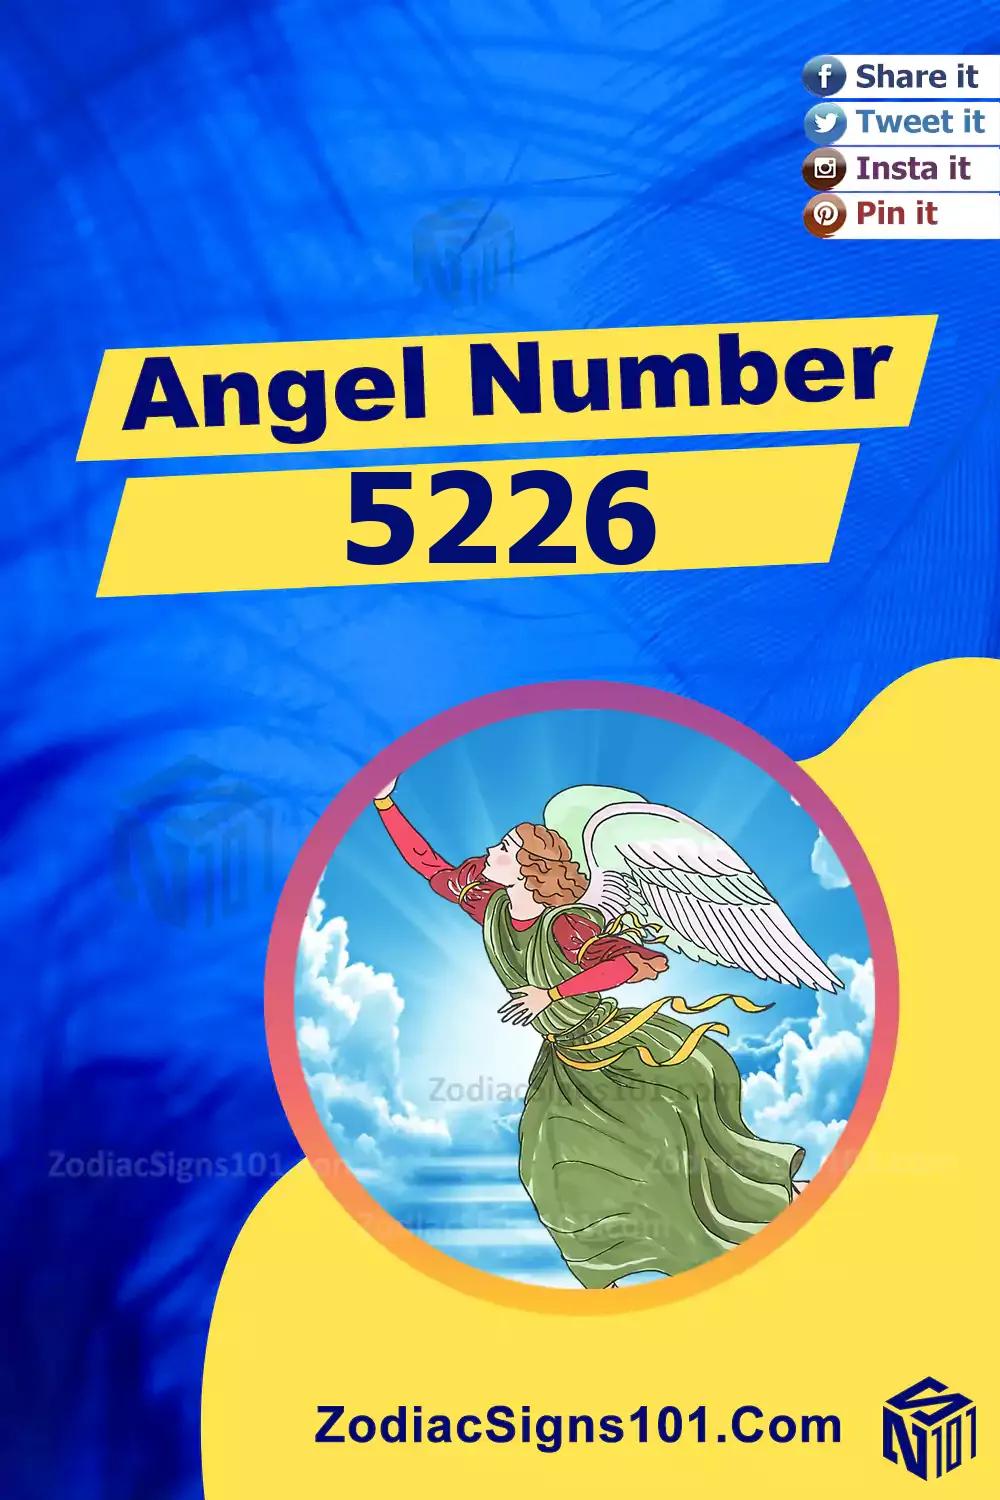 5226-Angel-Number-Meaning.jpg